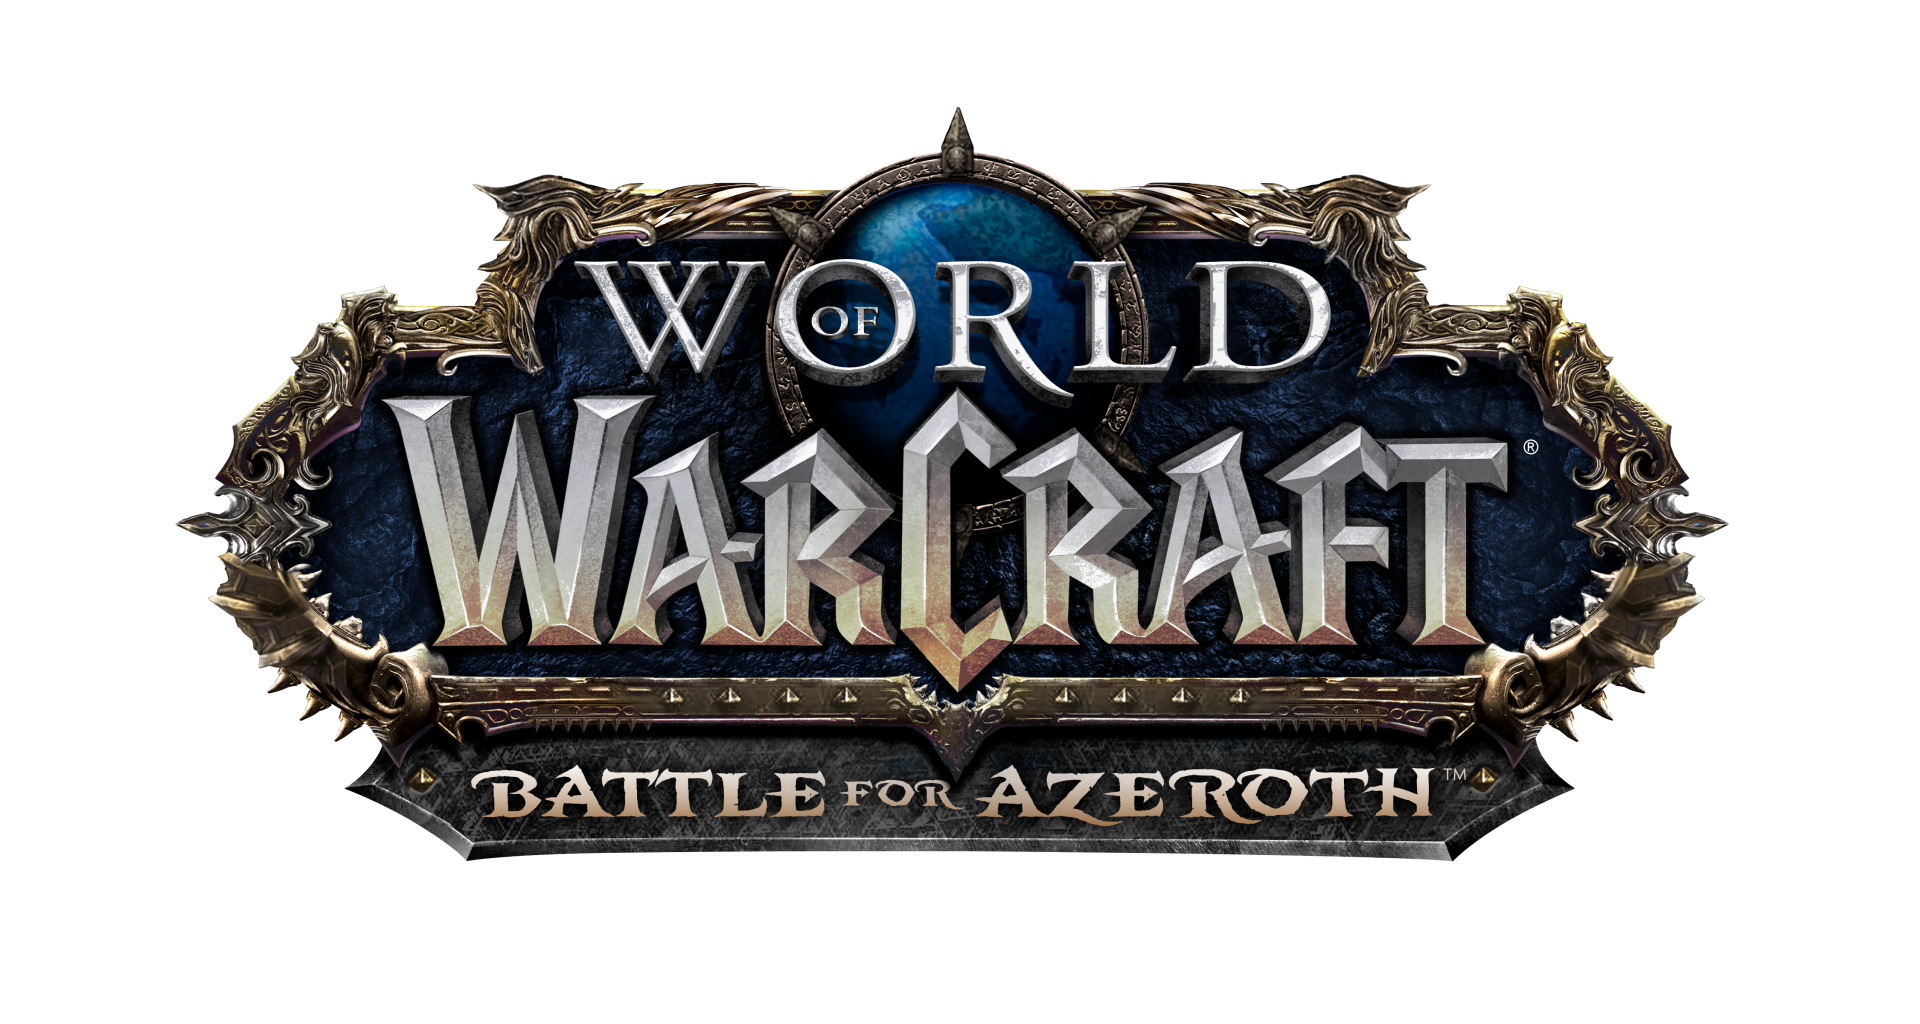 Оф сайт варкрафта. Варкрафт Battle for Azeroth. Wow: Battle for Azeroth logo. World of Warcraft Азерот. Варкрафт битва за Азерот.